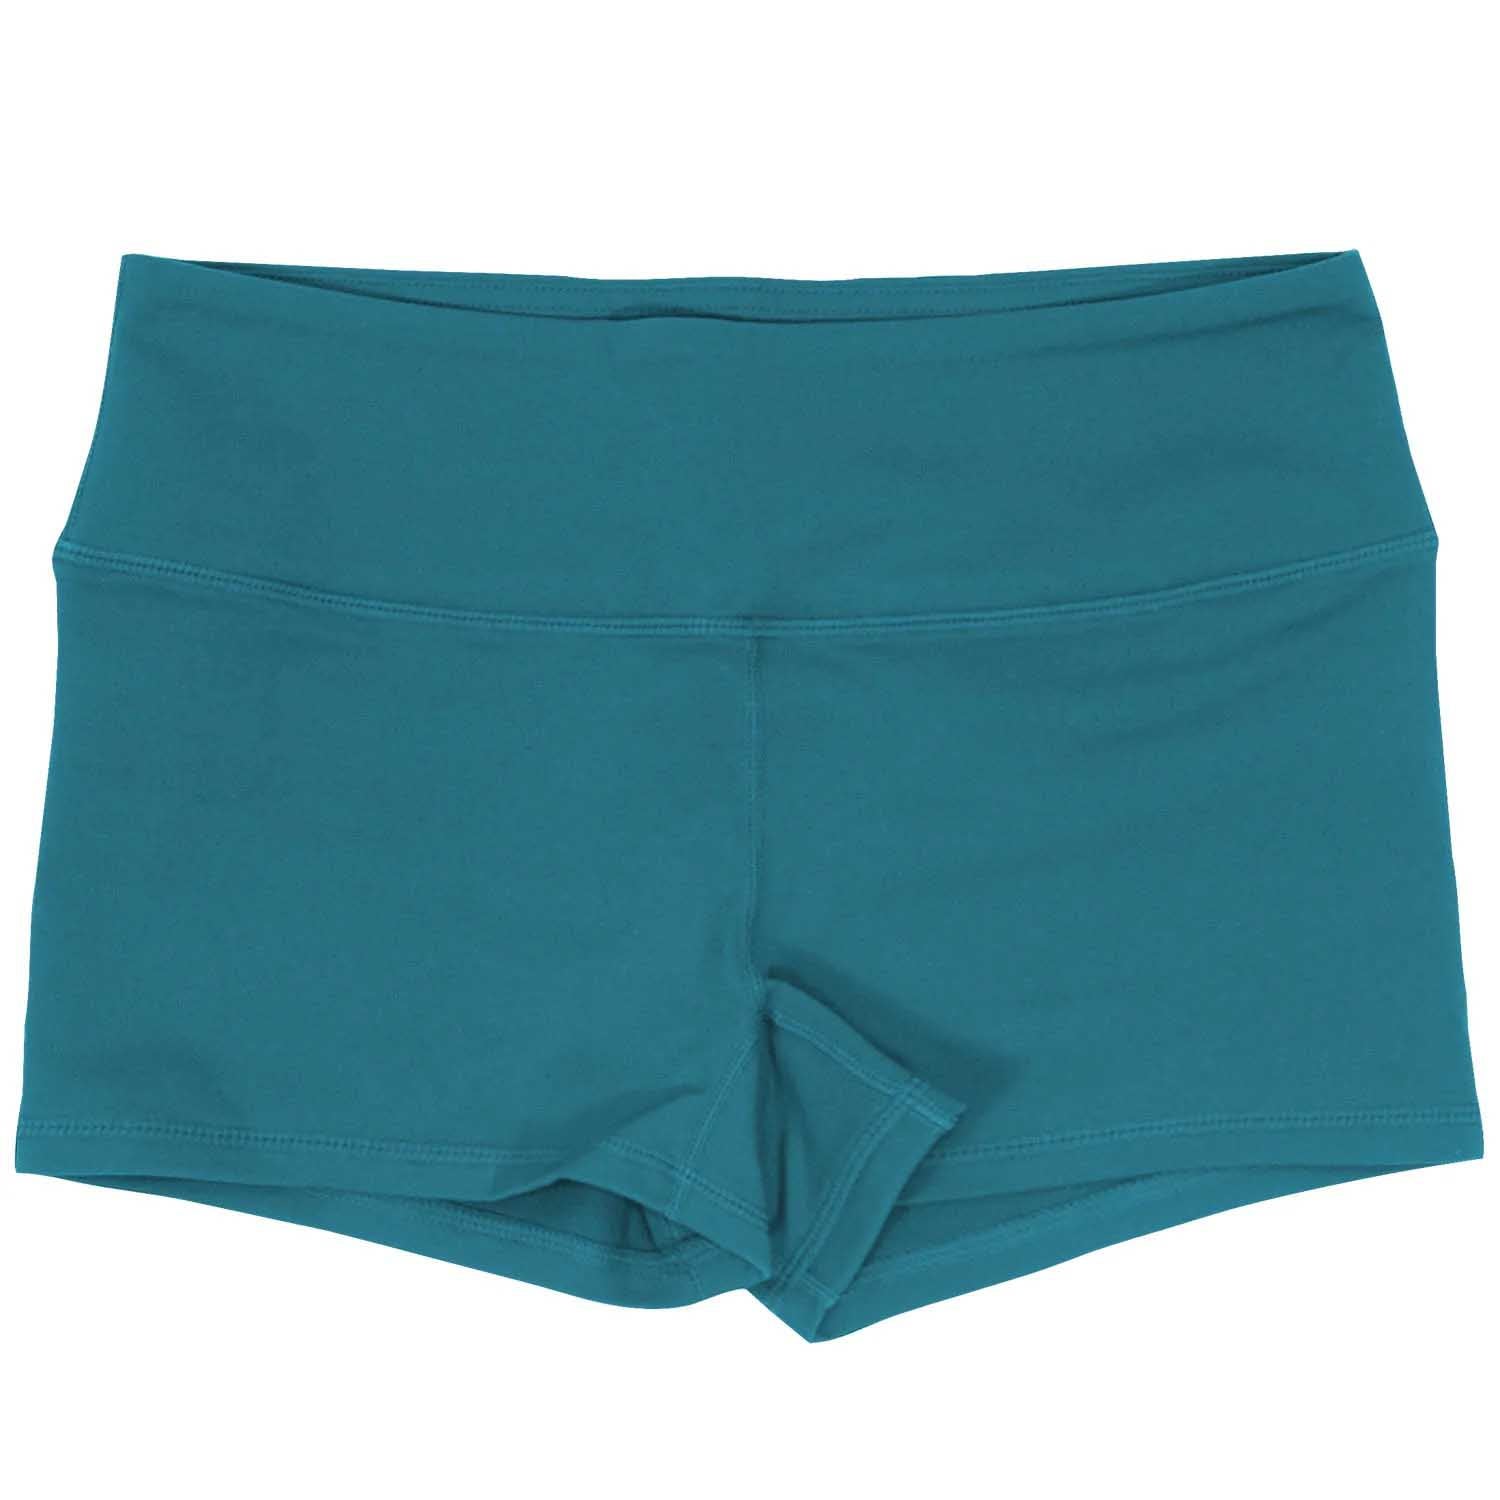 Blaugrüne Booty-Shorts